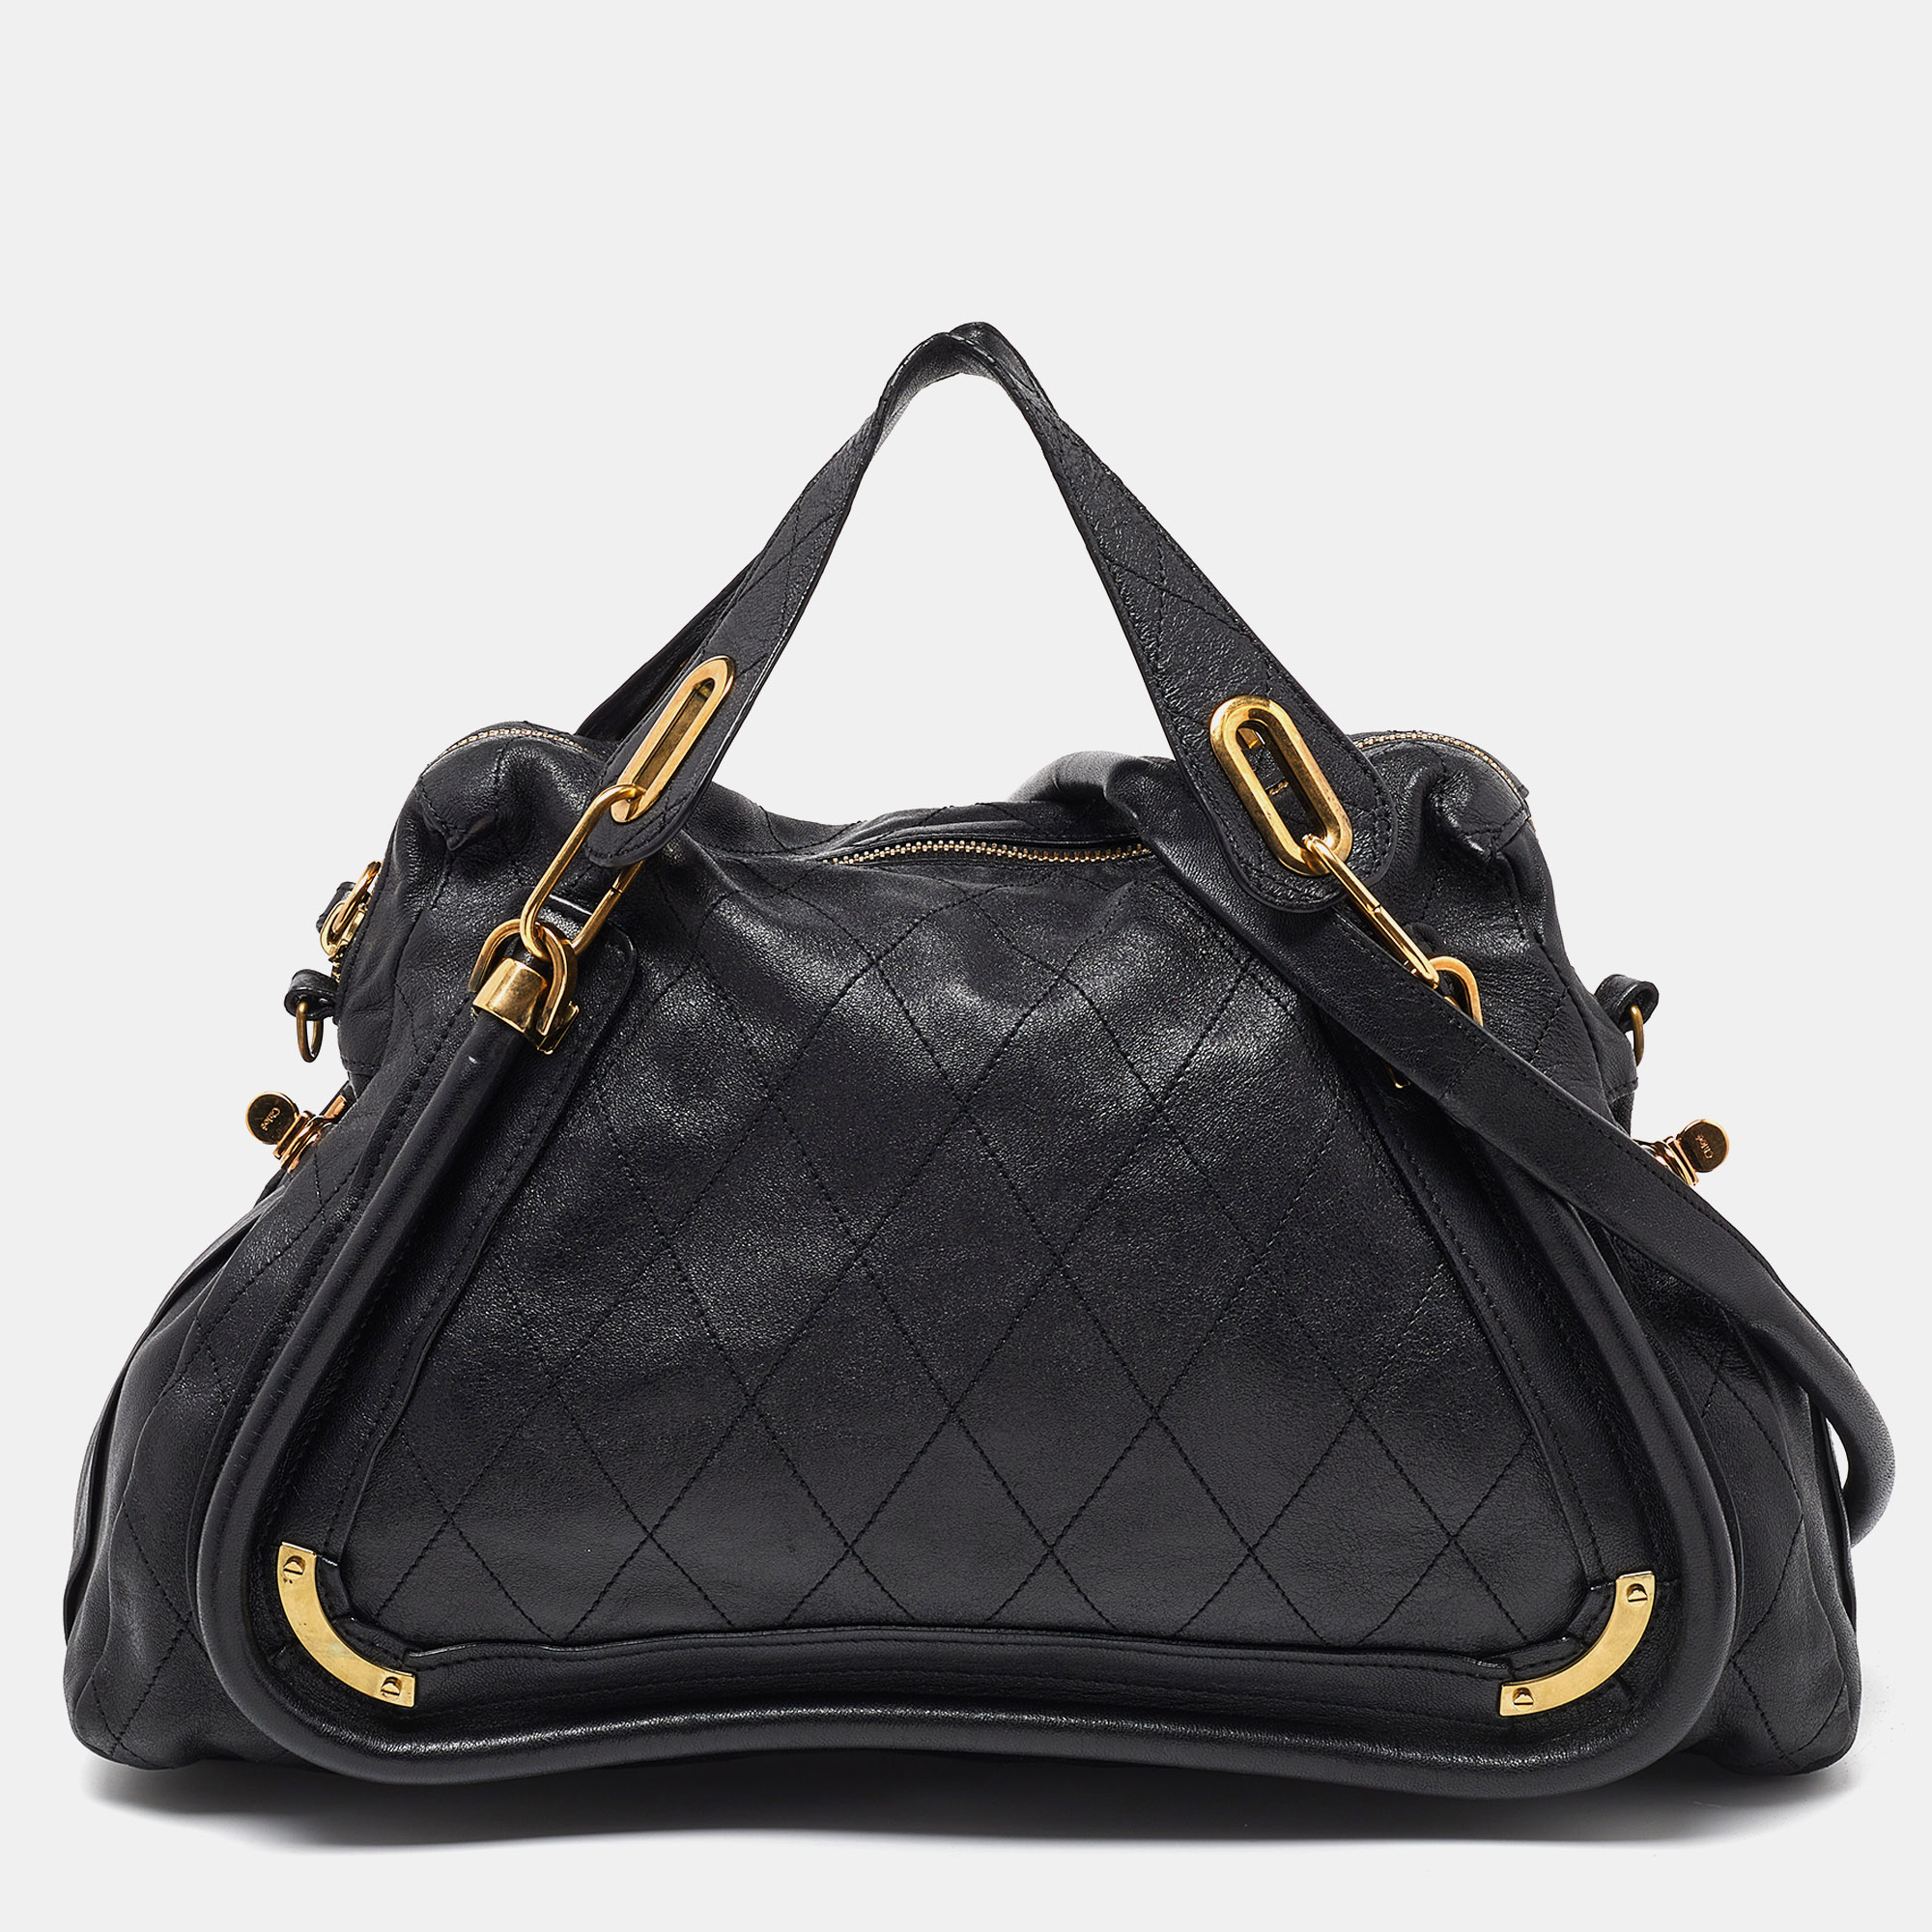 Chloe black leather large paraty satchel